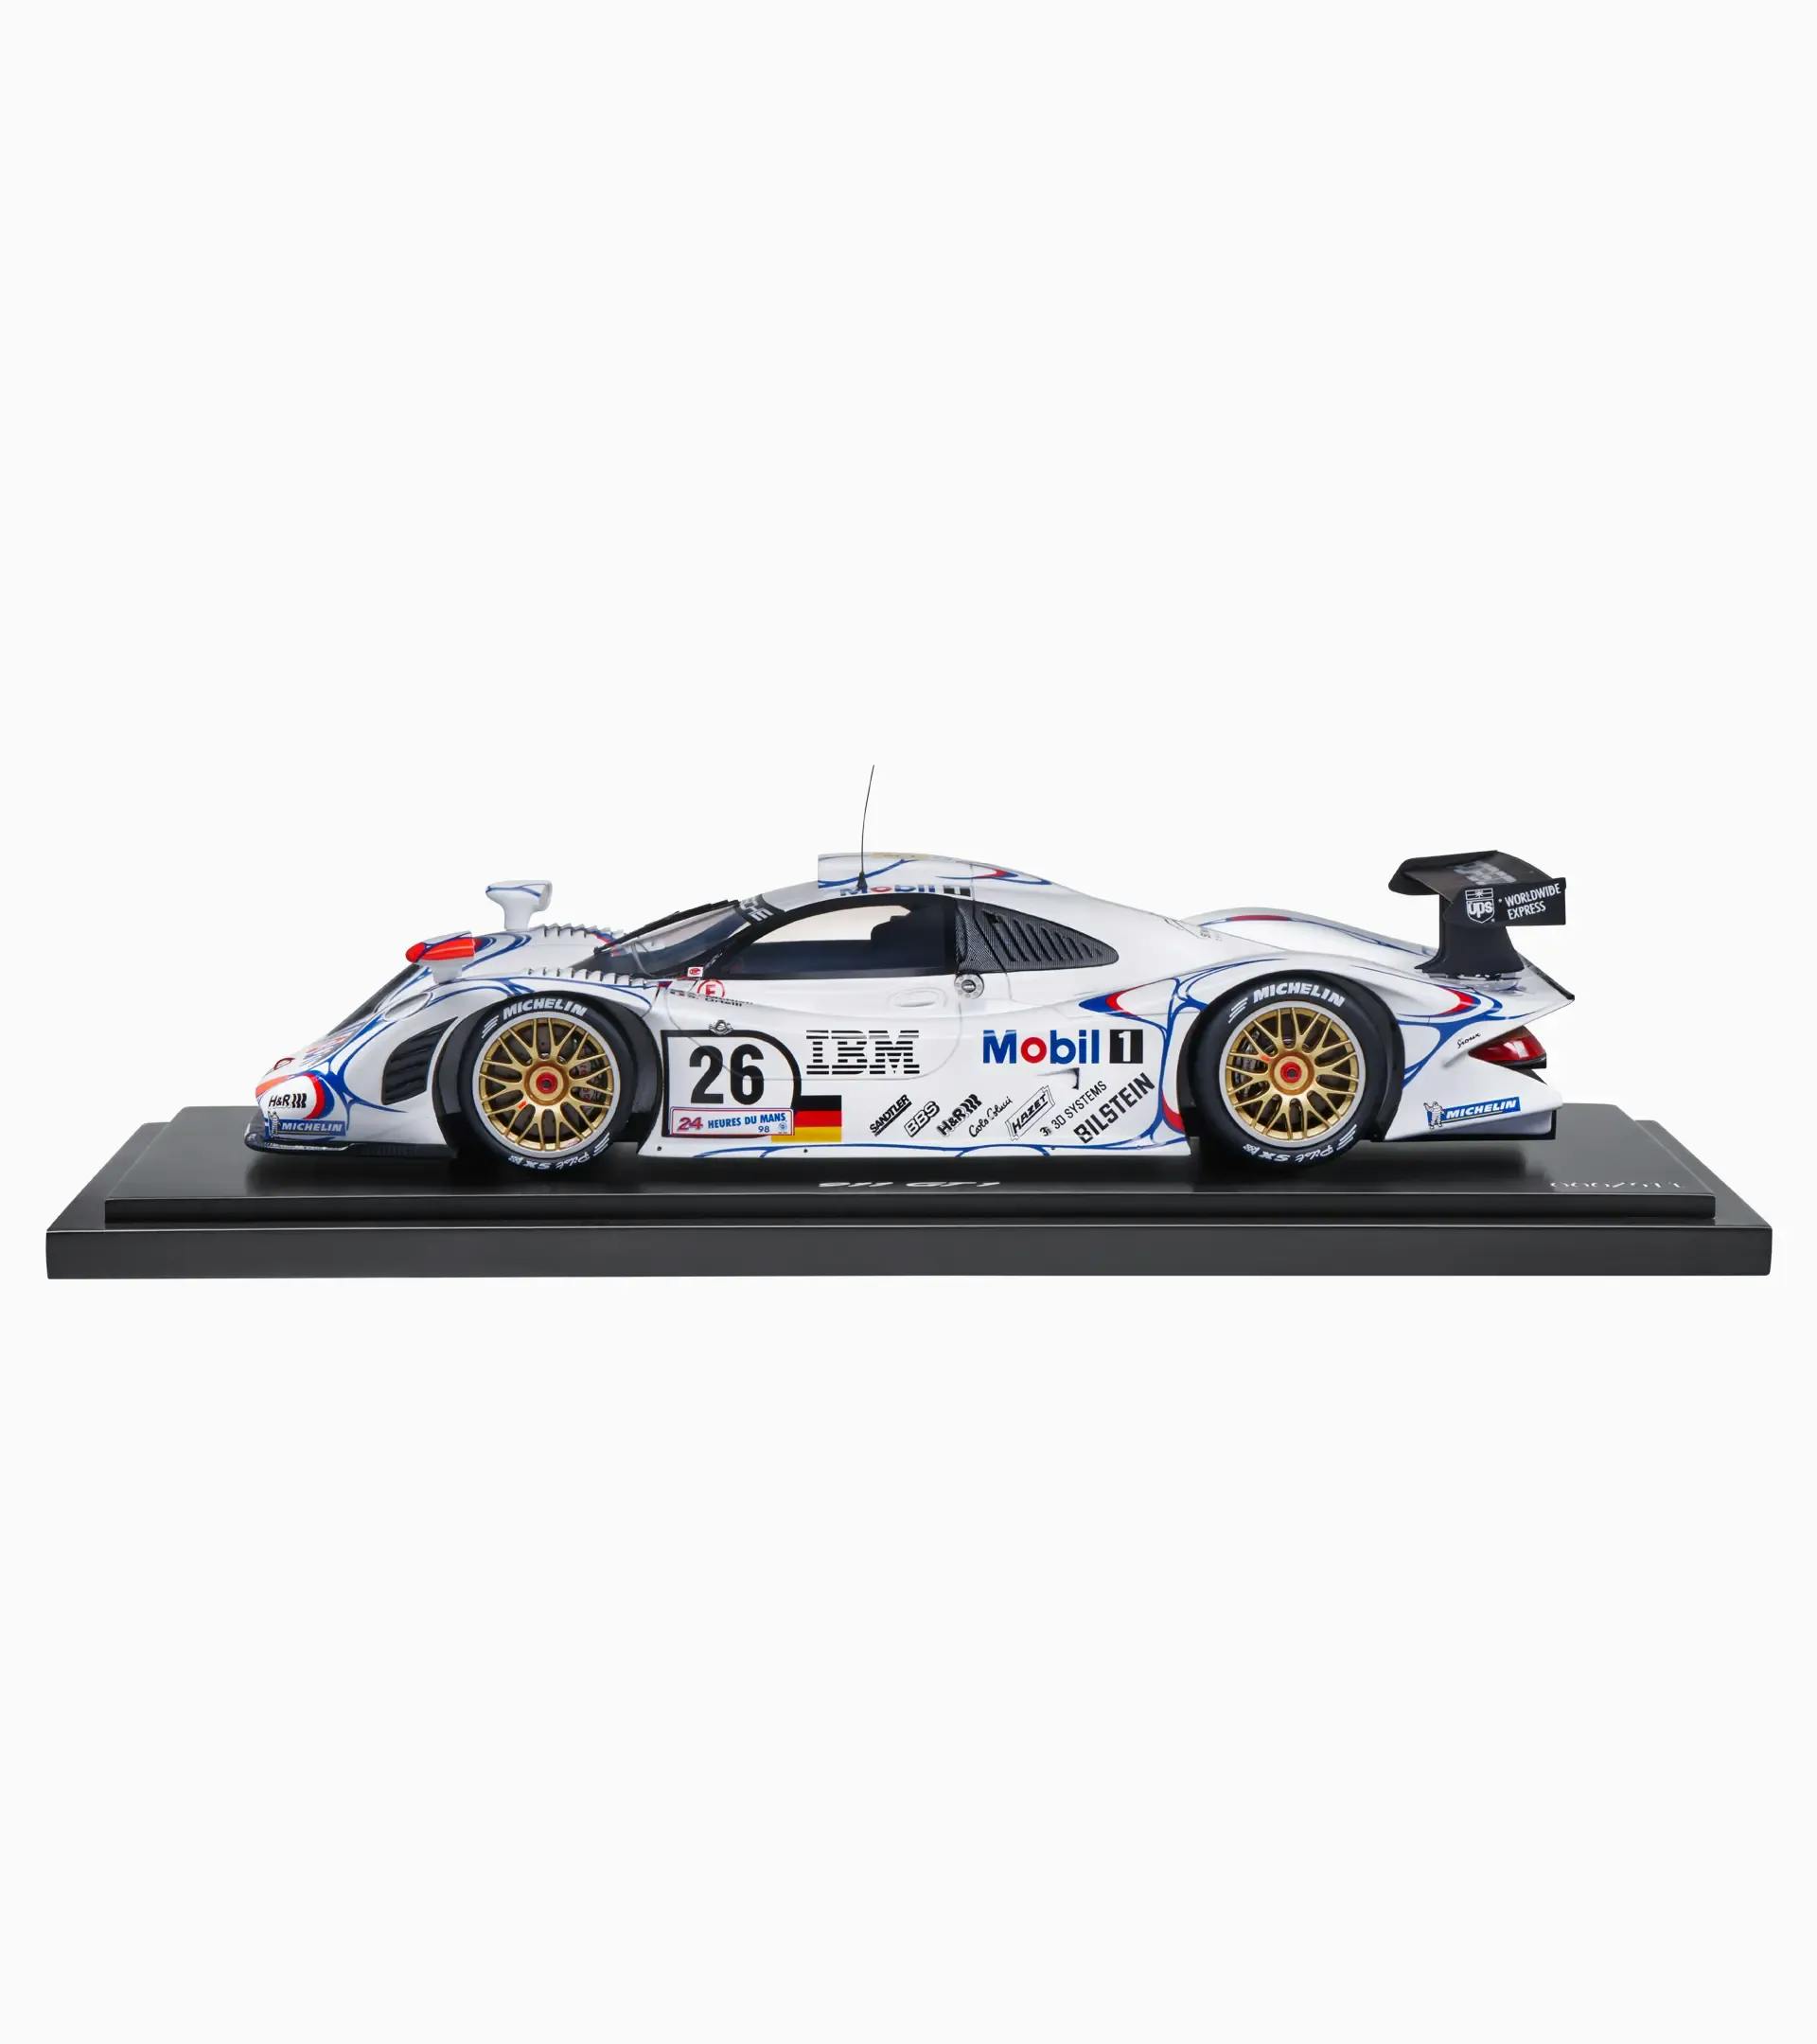 Porsche 911 GT1'98 vincitrice della 24h di Le Mans 1998 – Ltd.  3